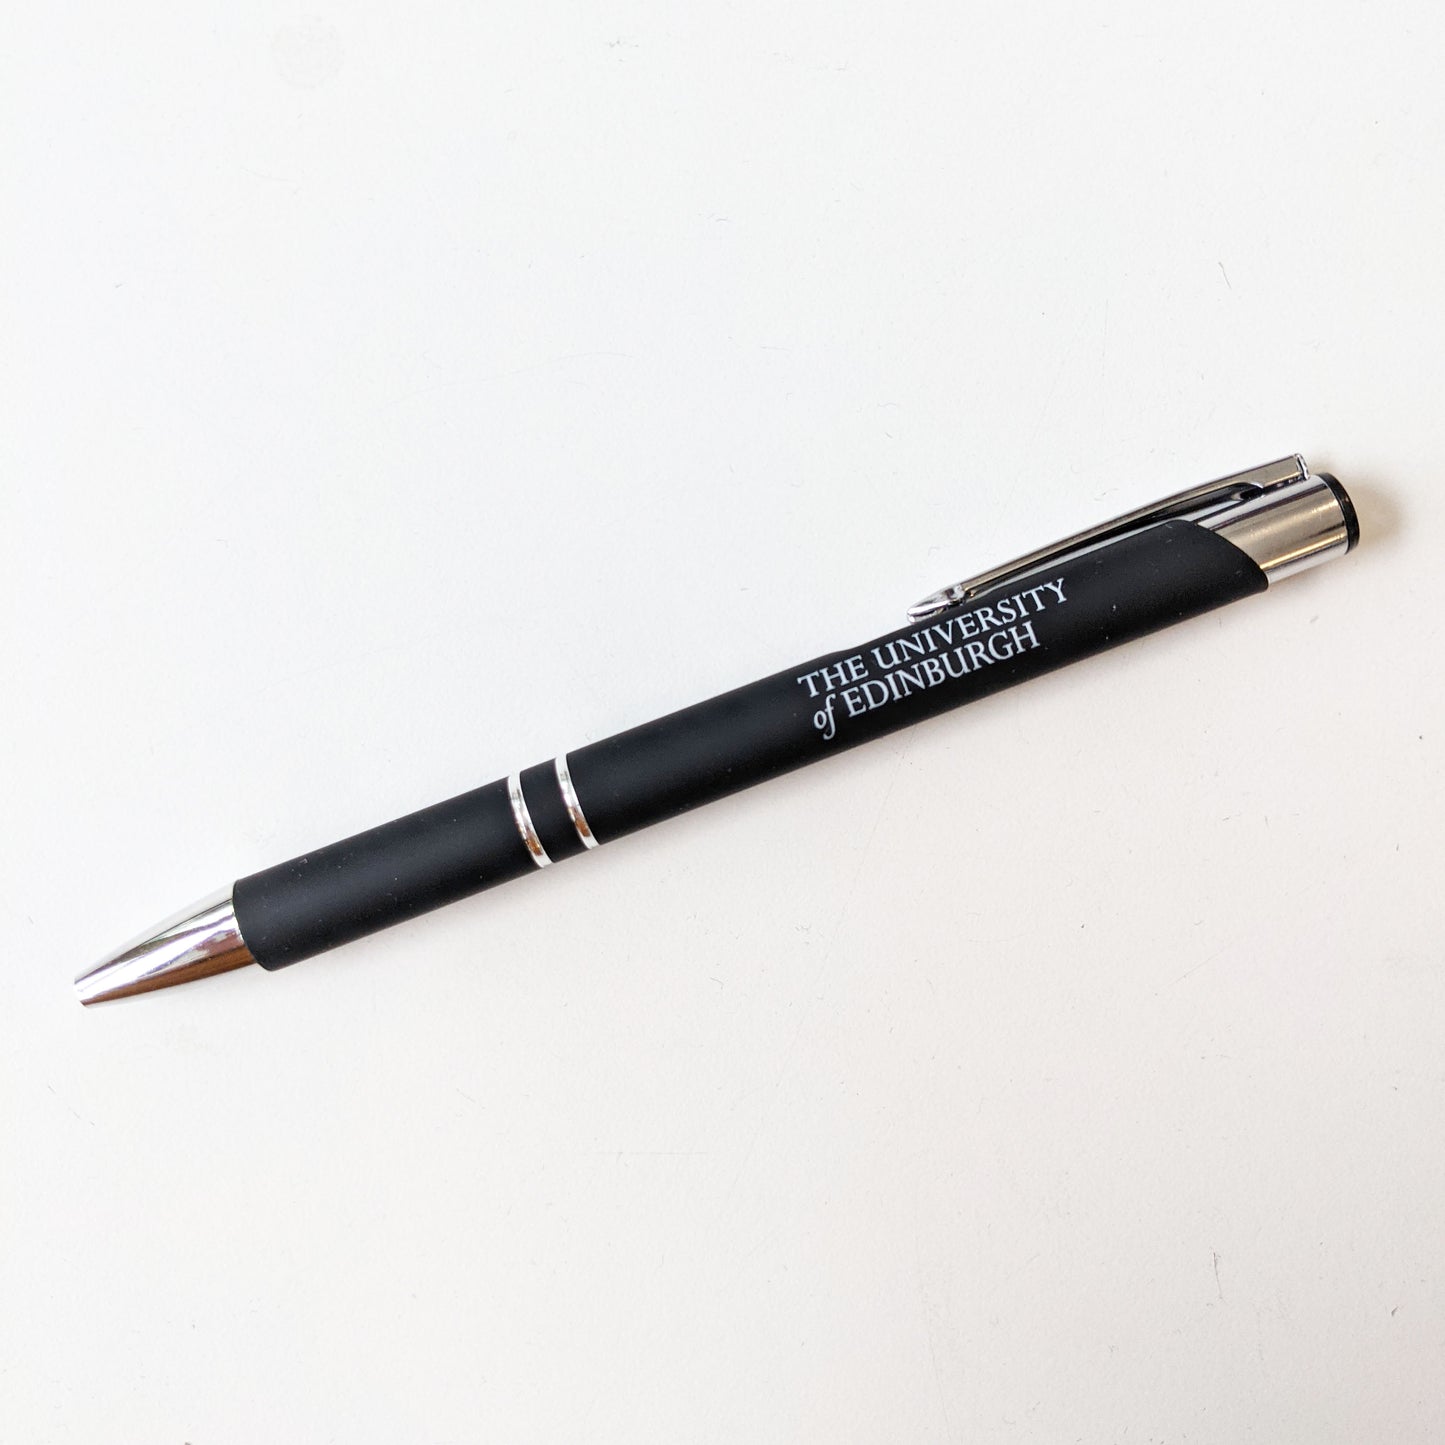 Black soft feel pen with 'The University of Edinburgh' printed on the barrel in white. 